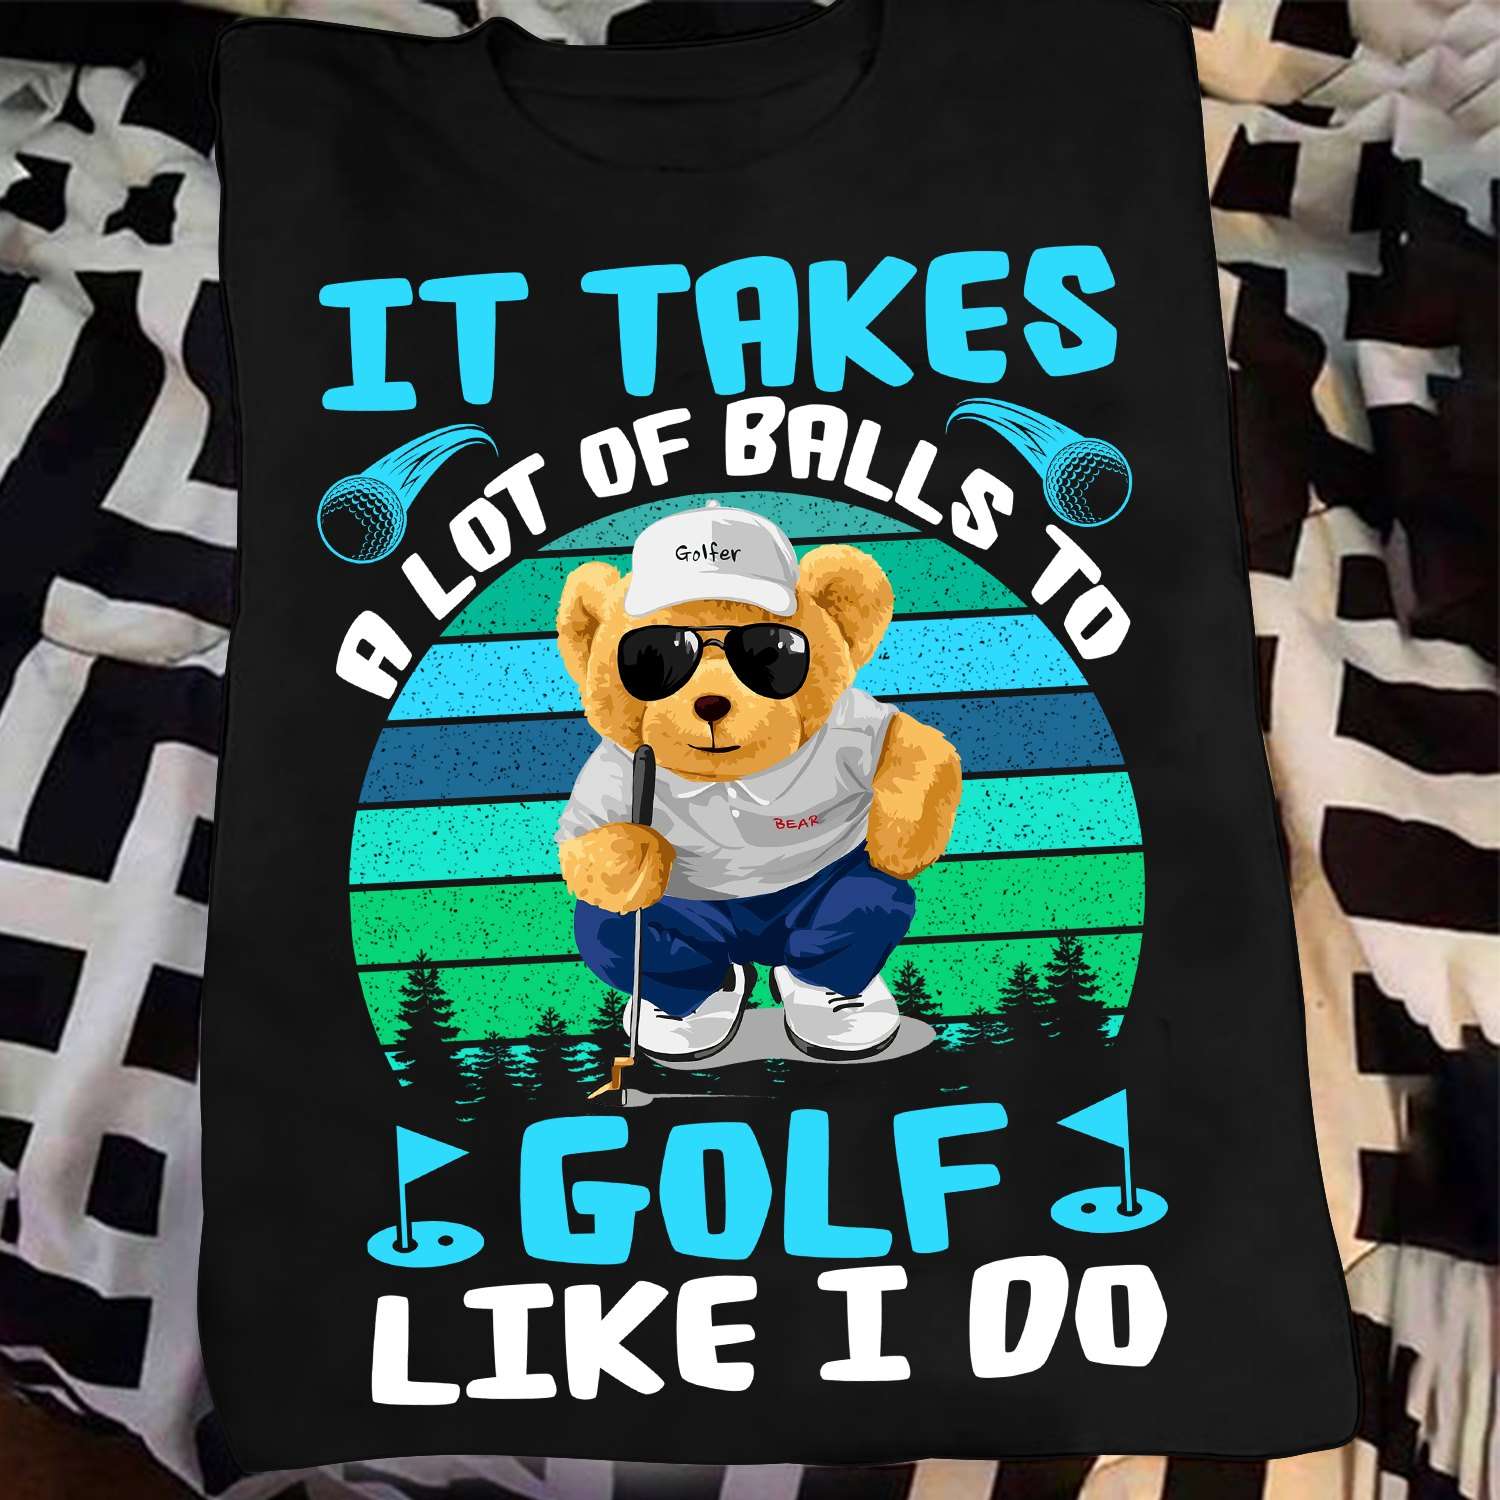 It takes a lot of balls to golf like I do - Teddy bear golfer, golf ball